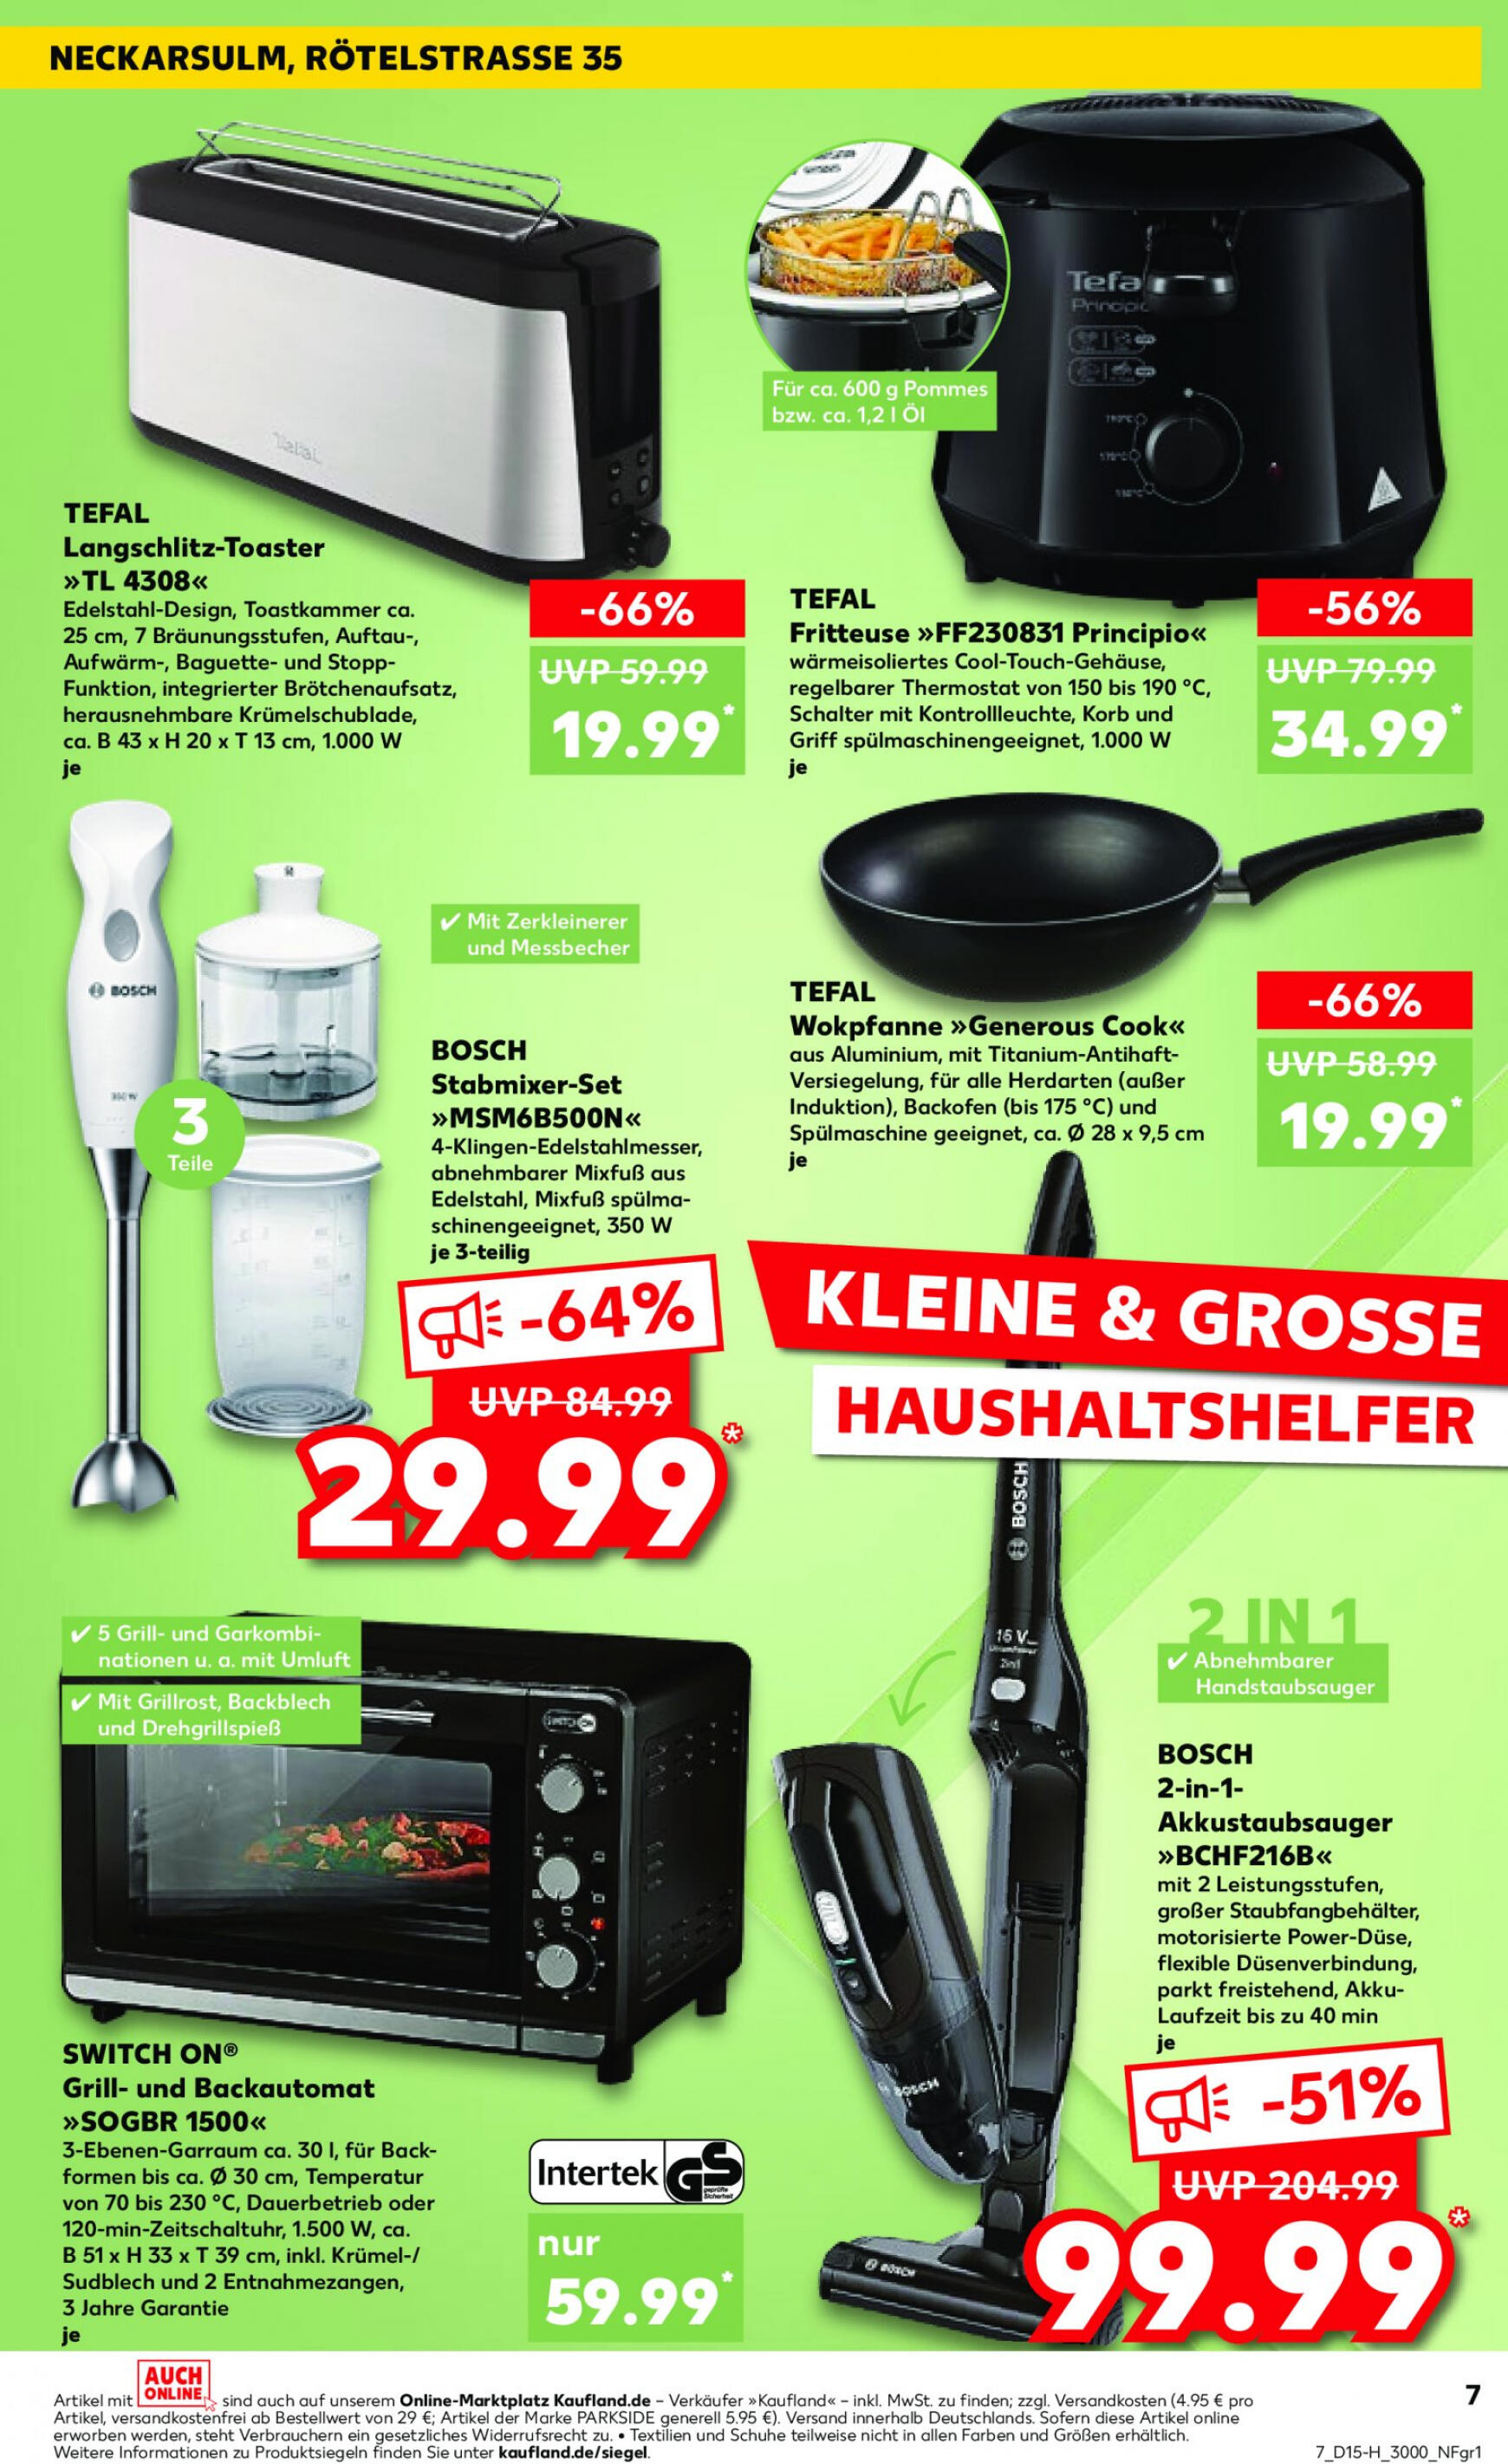 kaufland - Flyer Kaufland - Extra Angebote aktuell 11.04. - 17.04. - page: 7